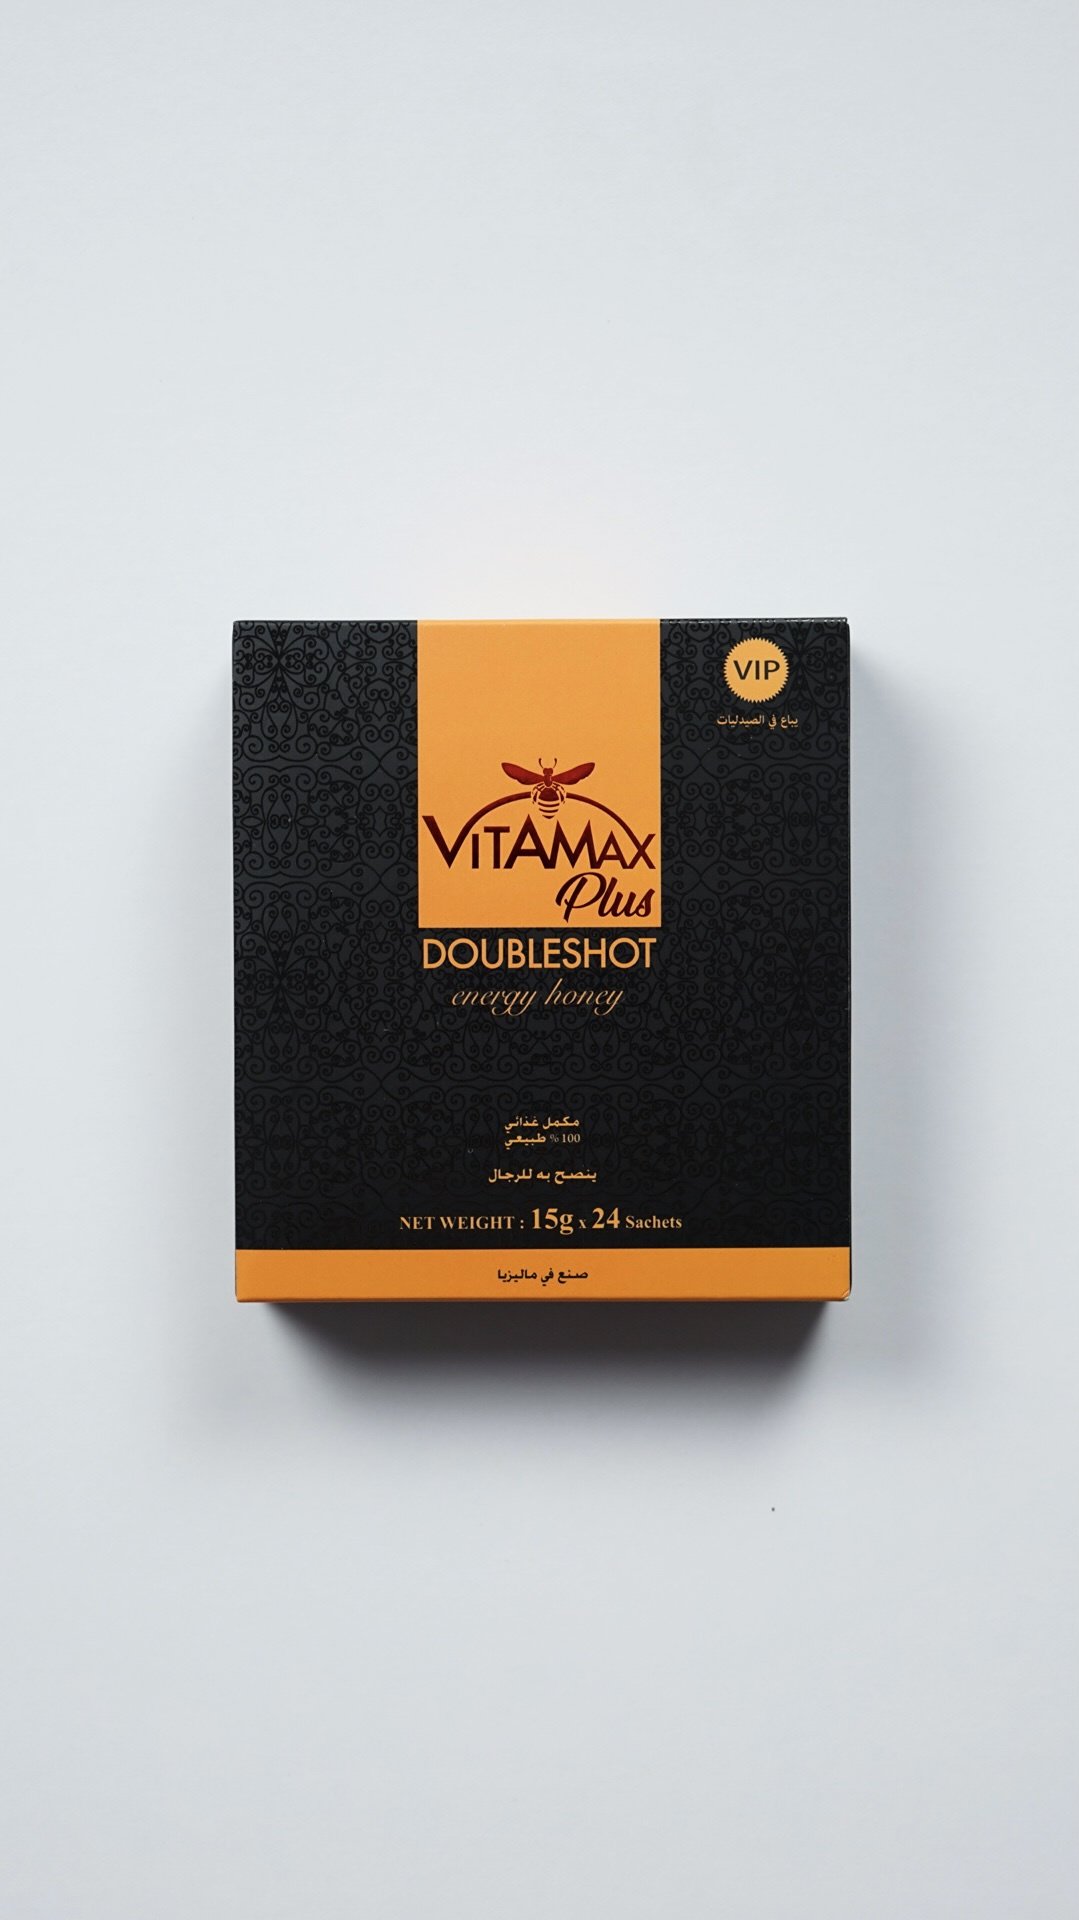 VITAMAX PLUS Double shot Energy Honey